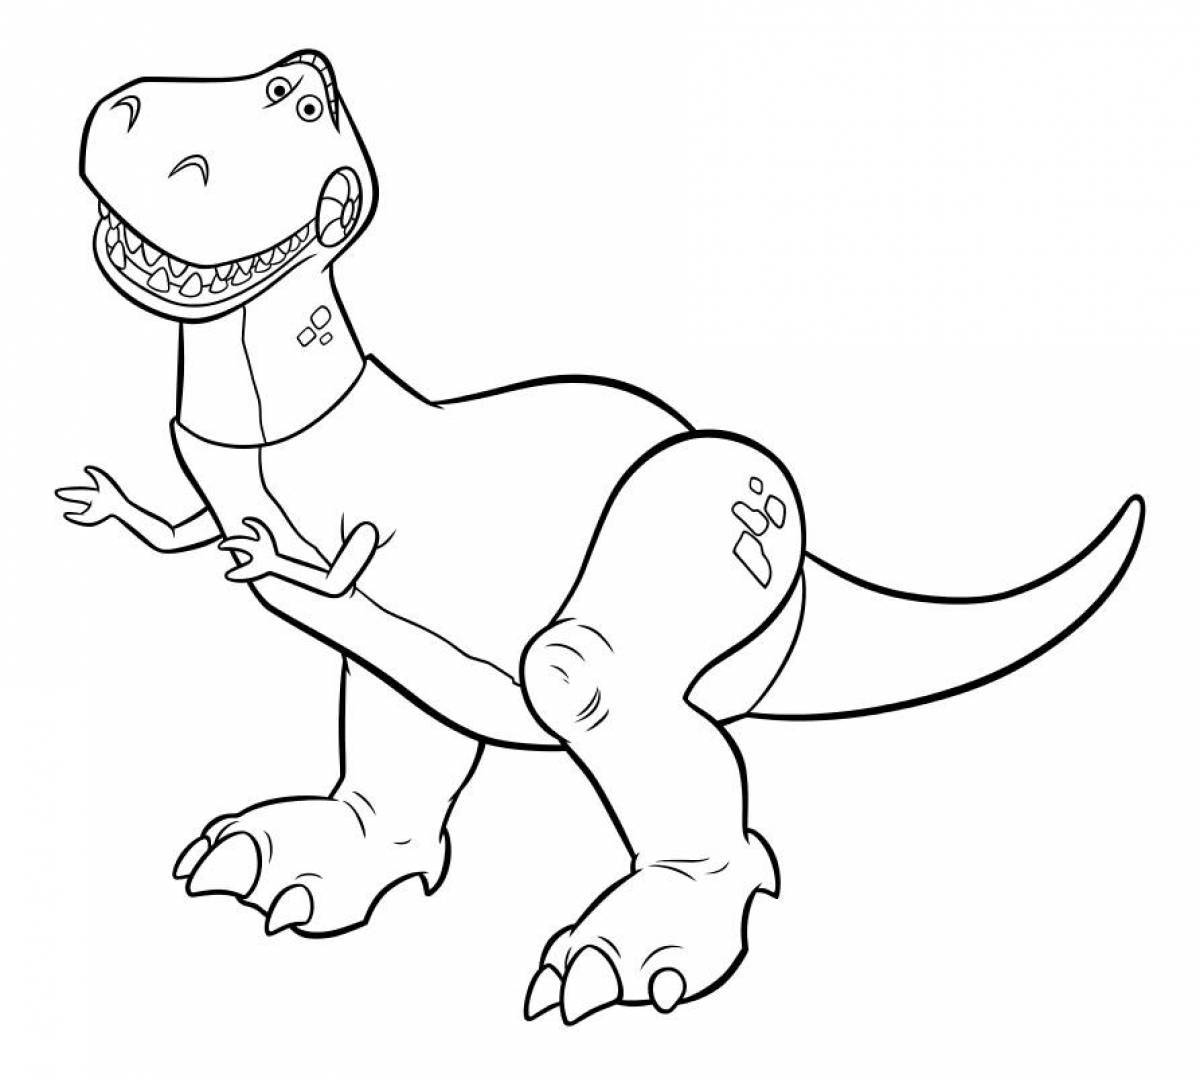 Terrific tyrannosaurus rex coloring book